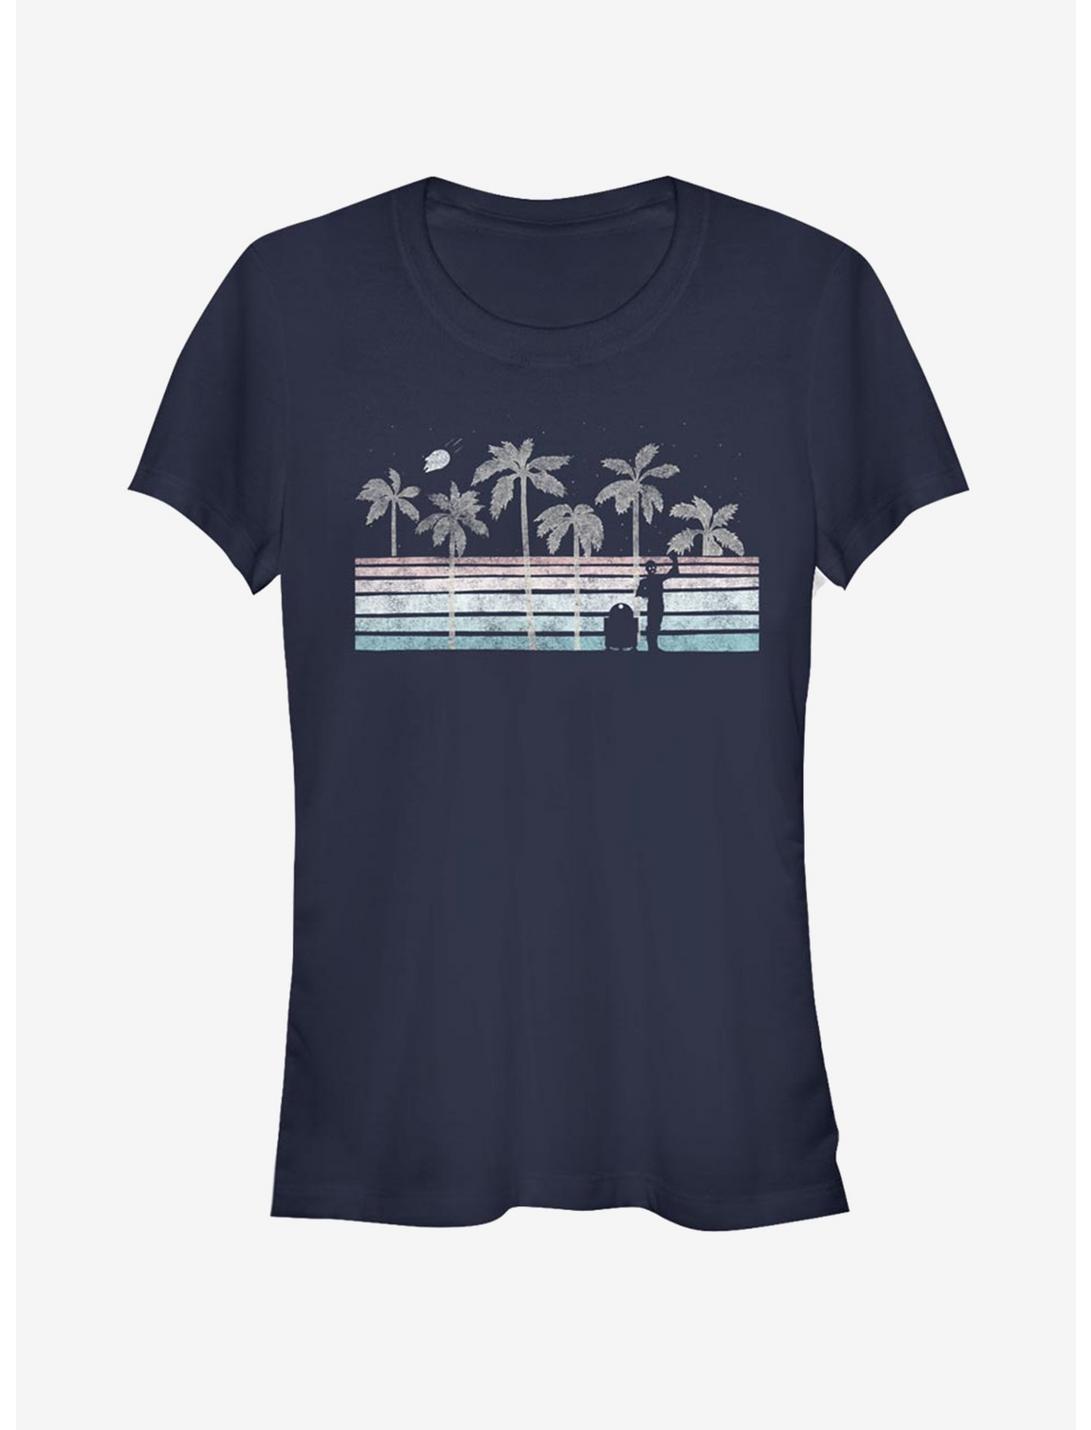 Star Wars Neon Paradise Girls T-Shirt, NAVY, hi-res